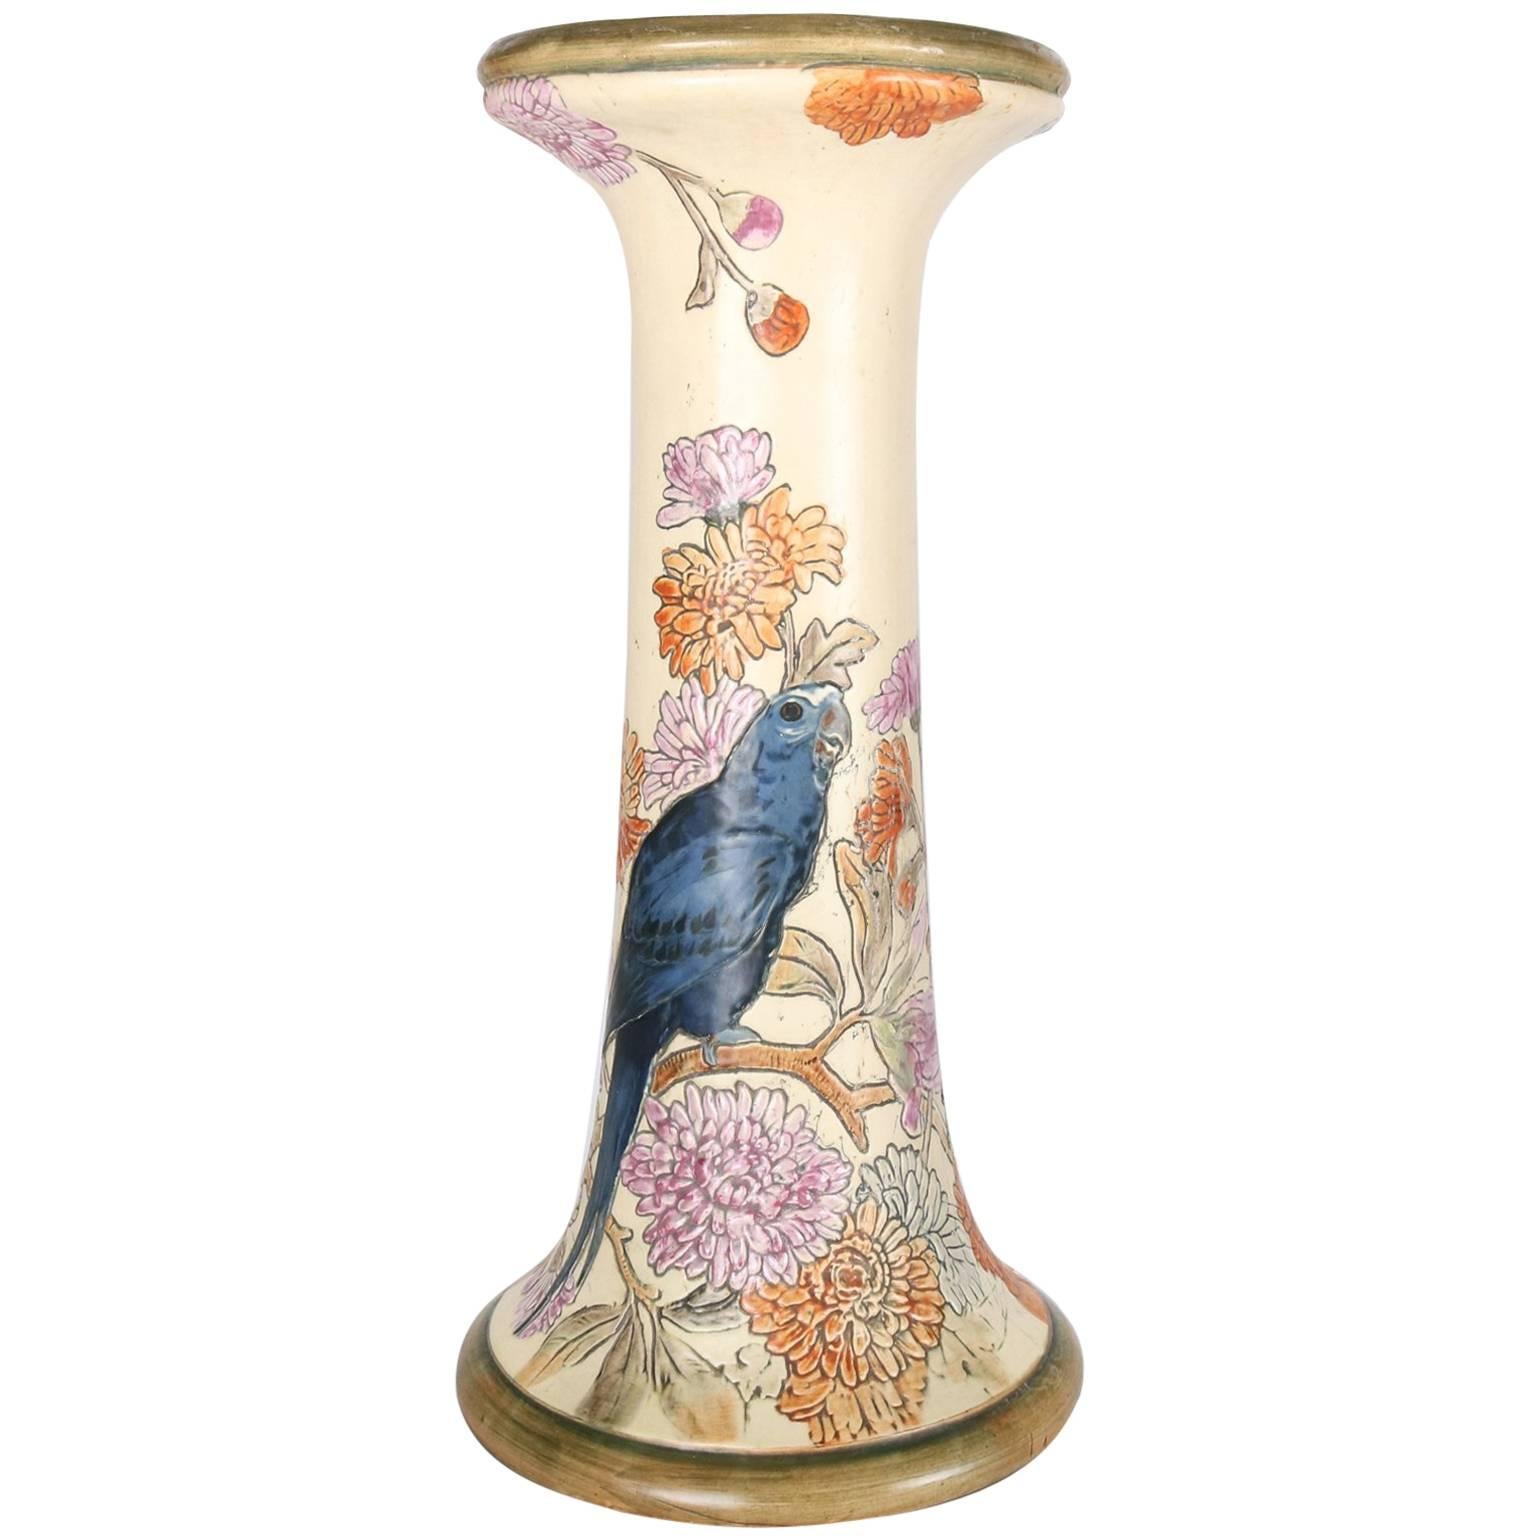 Antique Gilt & Painted Weller Pottery Pedestal Bird & Floral Motif, 19th Century